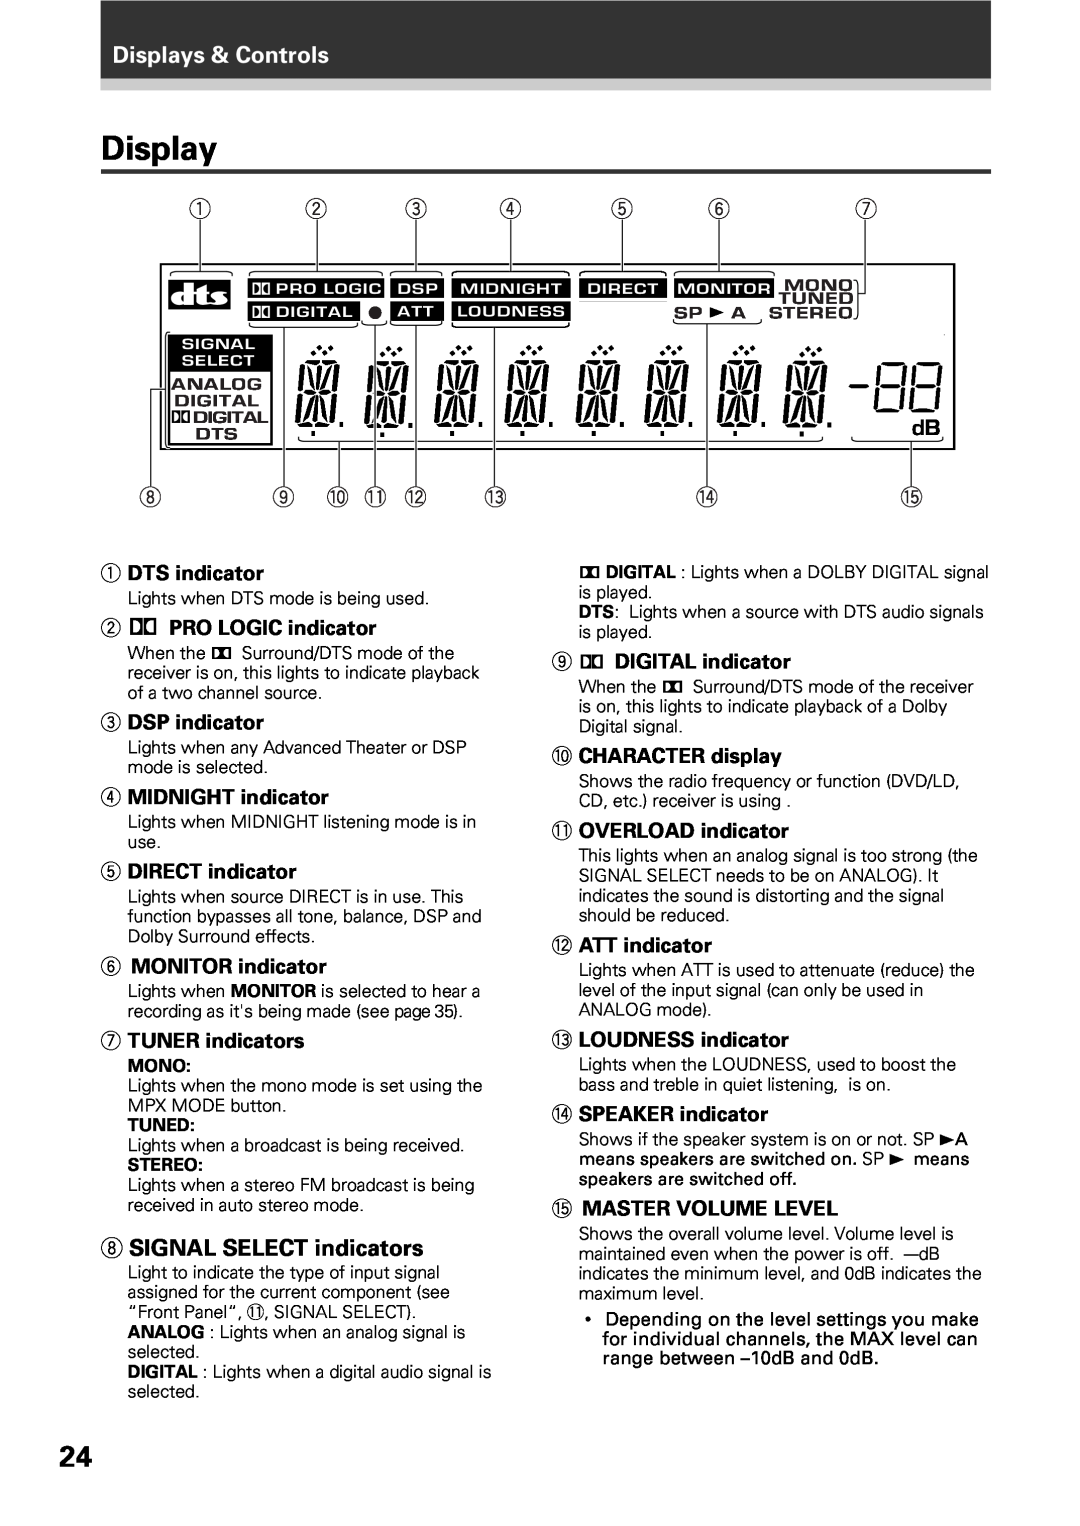 Pioneer VSX-D309 manual Displays & Controls, 8SIGNAL SELECT indicators 